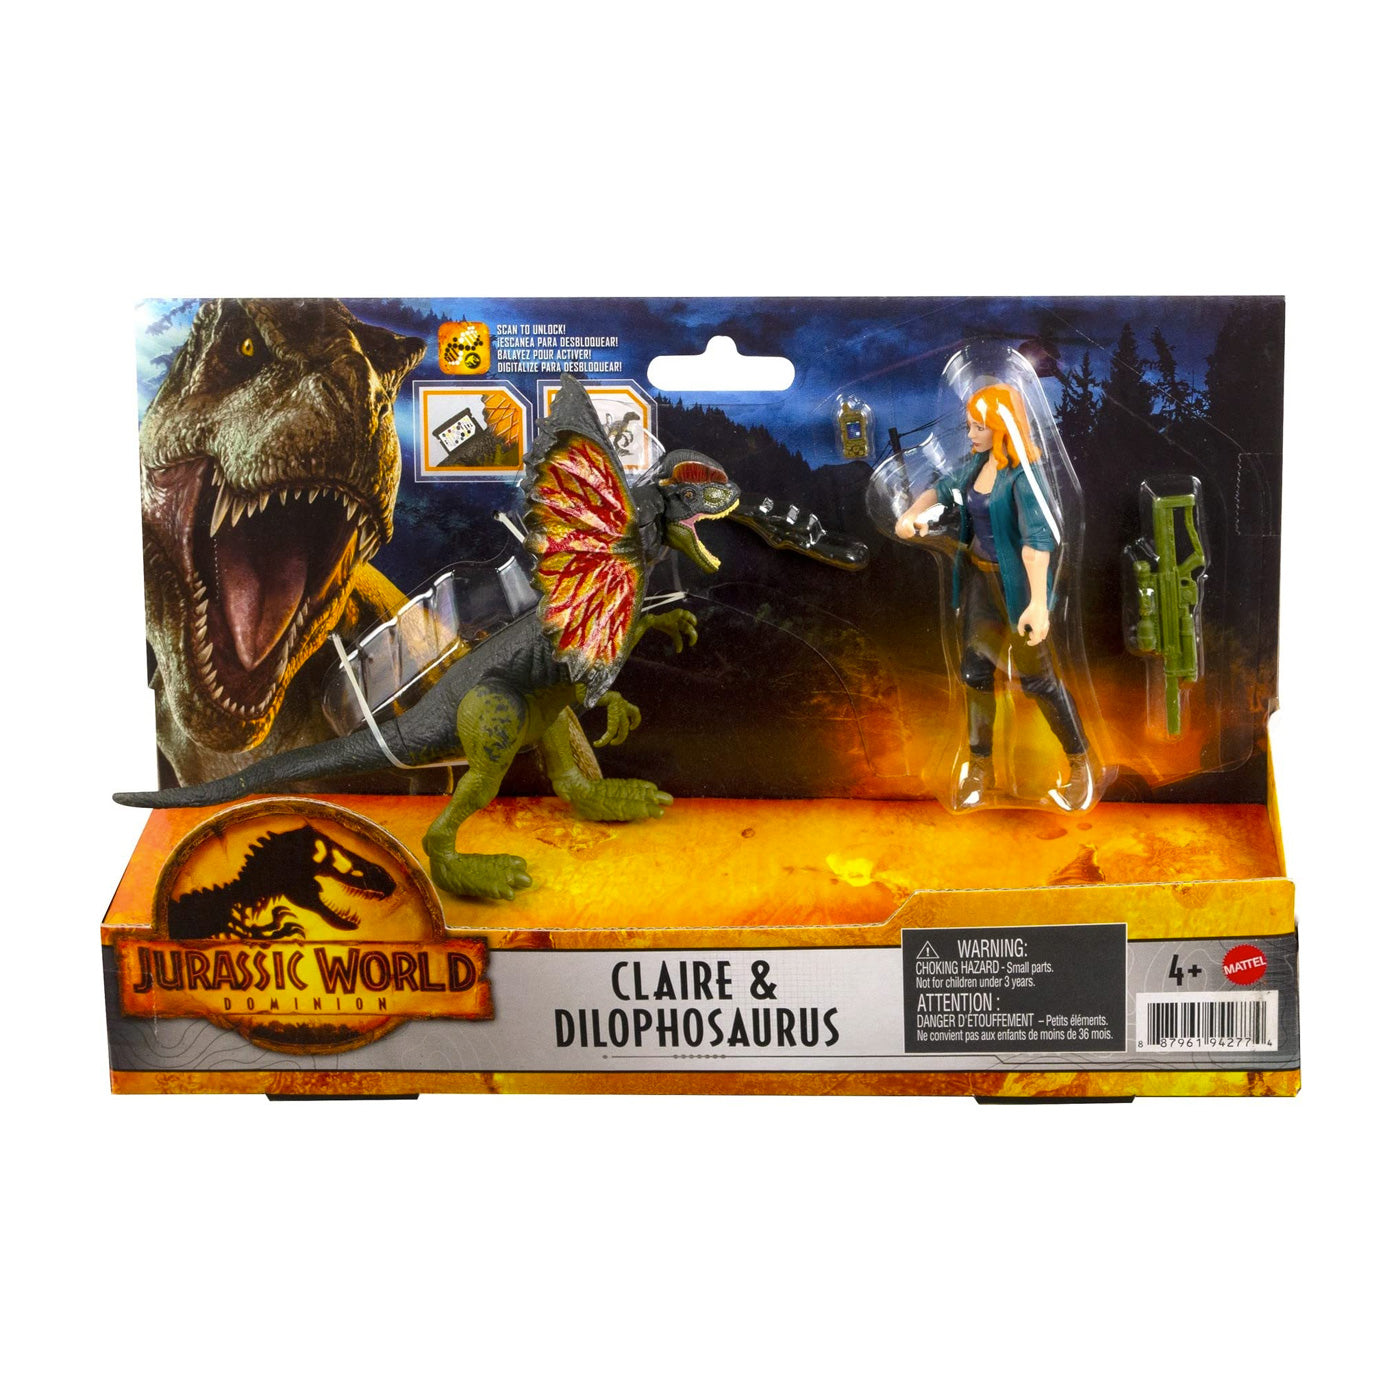 Jurassic World: Claire & Dilophosaurus